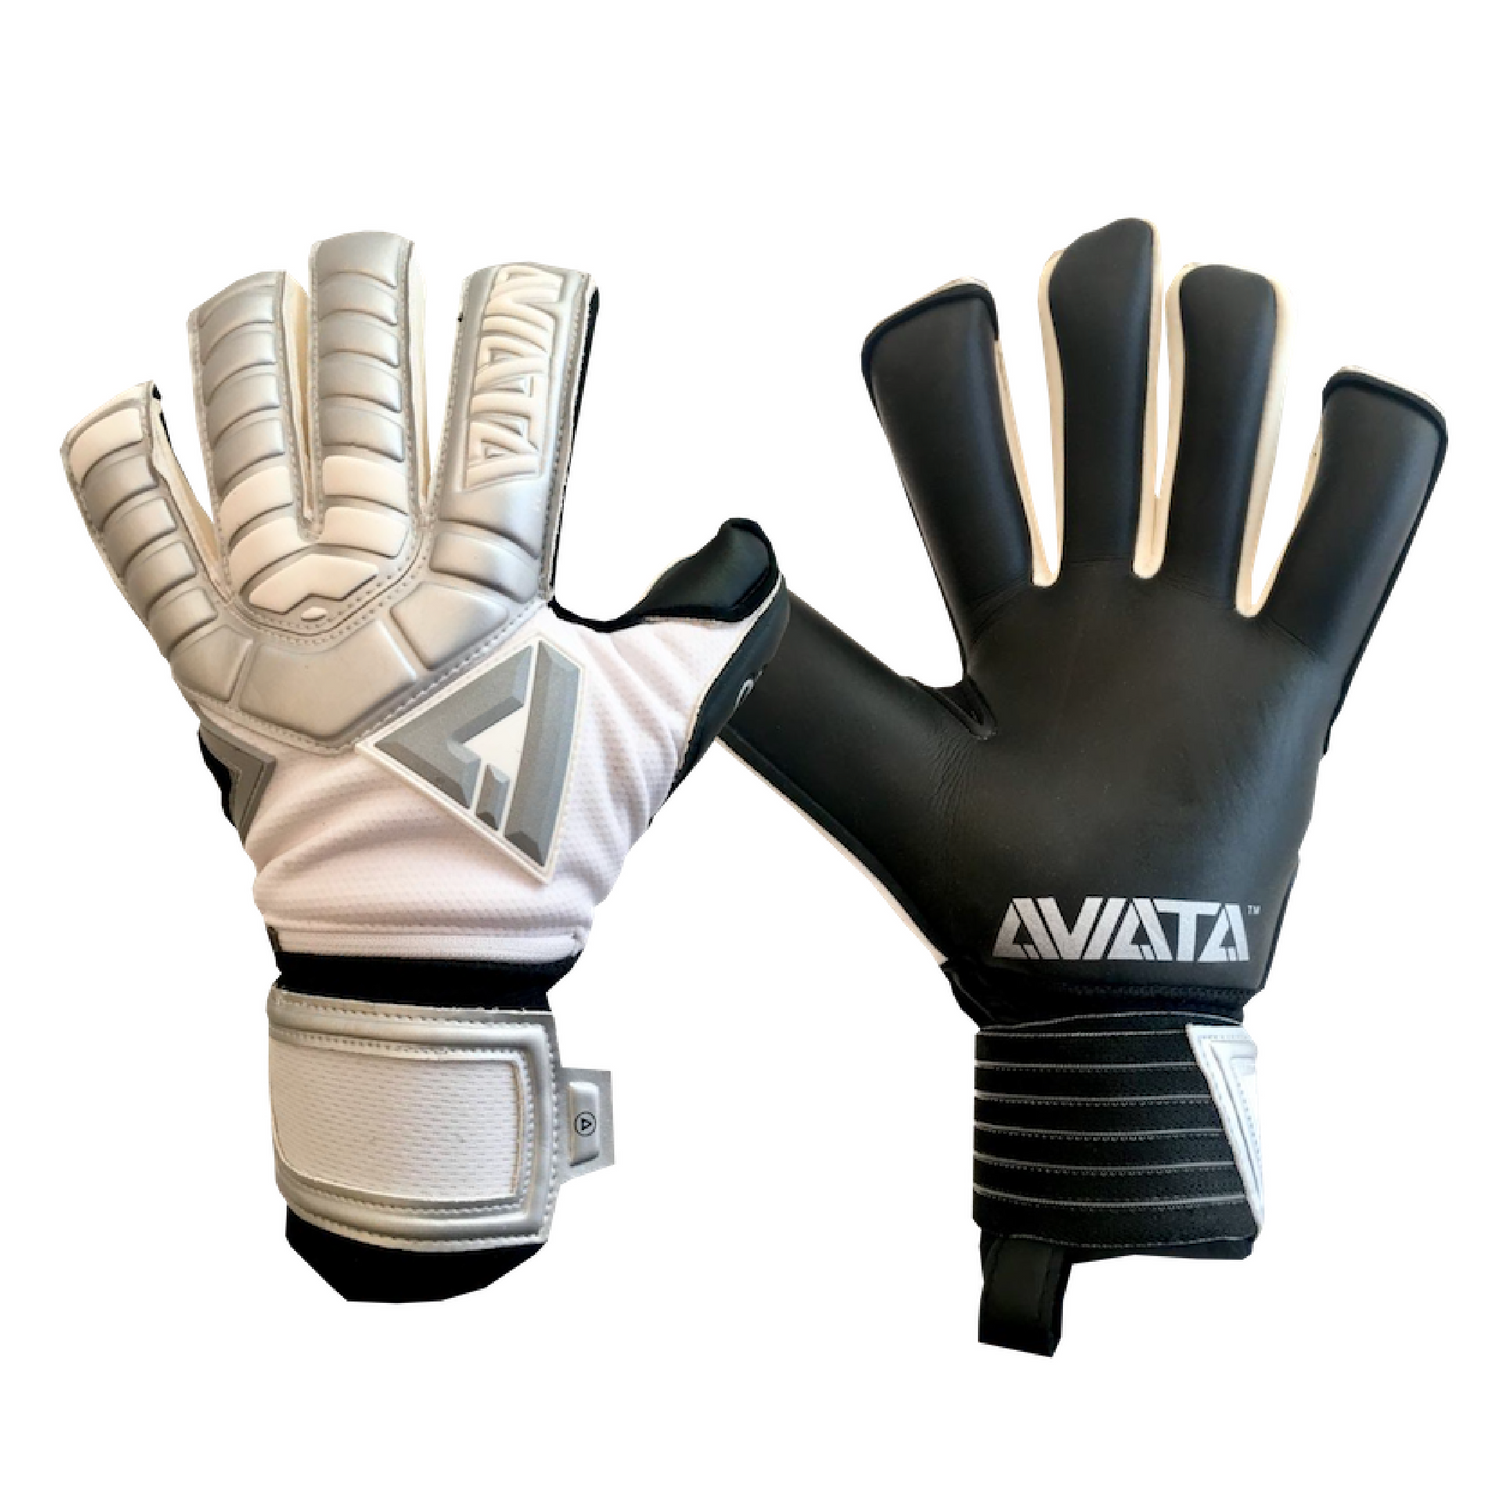 Aviata Sports O2 Yeti Limited Edition Weather Proof Goalkeeper Gloves